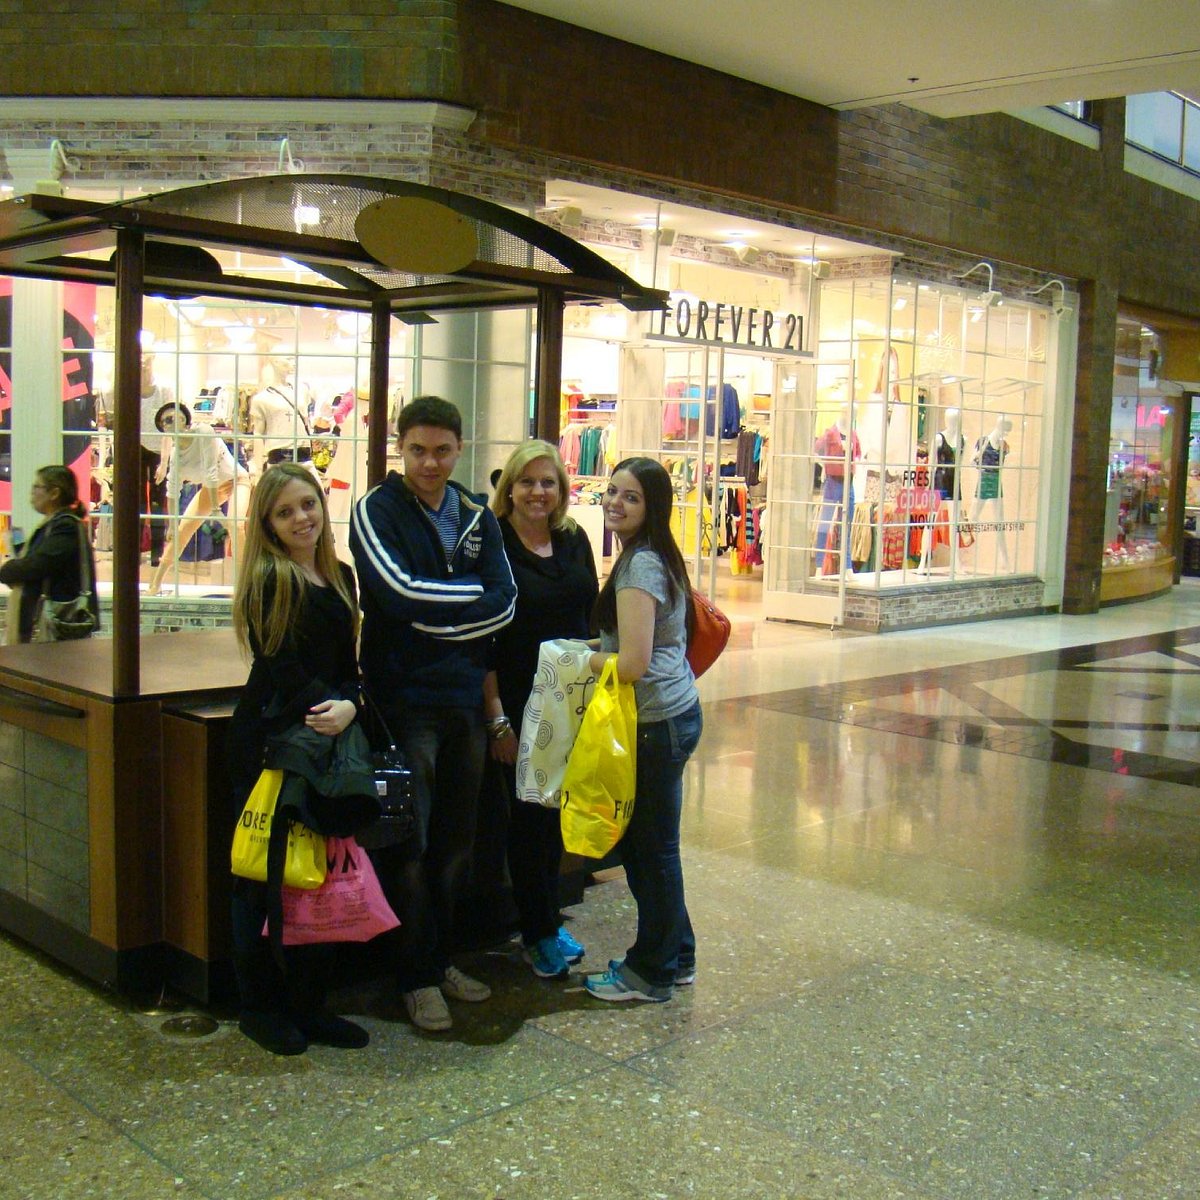 Galleria Mall Yelahanka: Where Shopping Dreams Come True